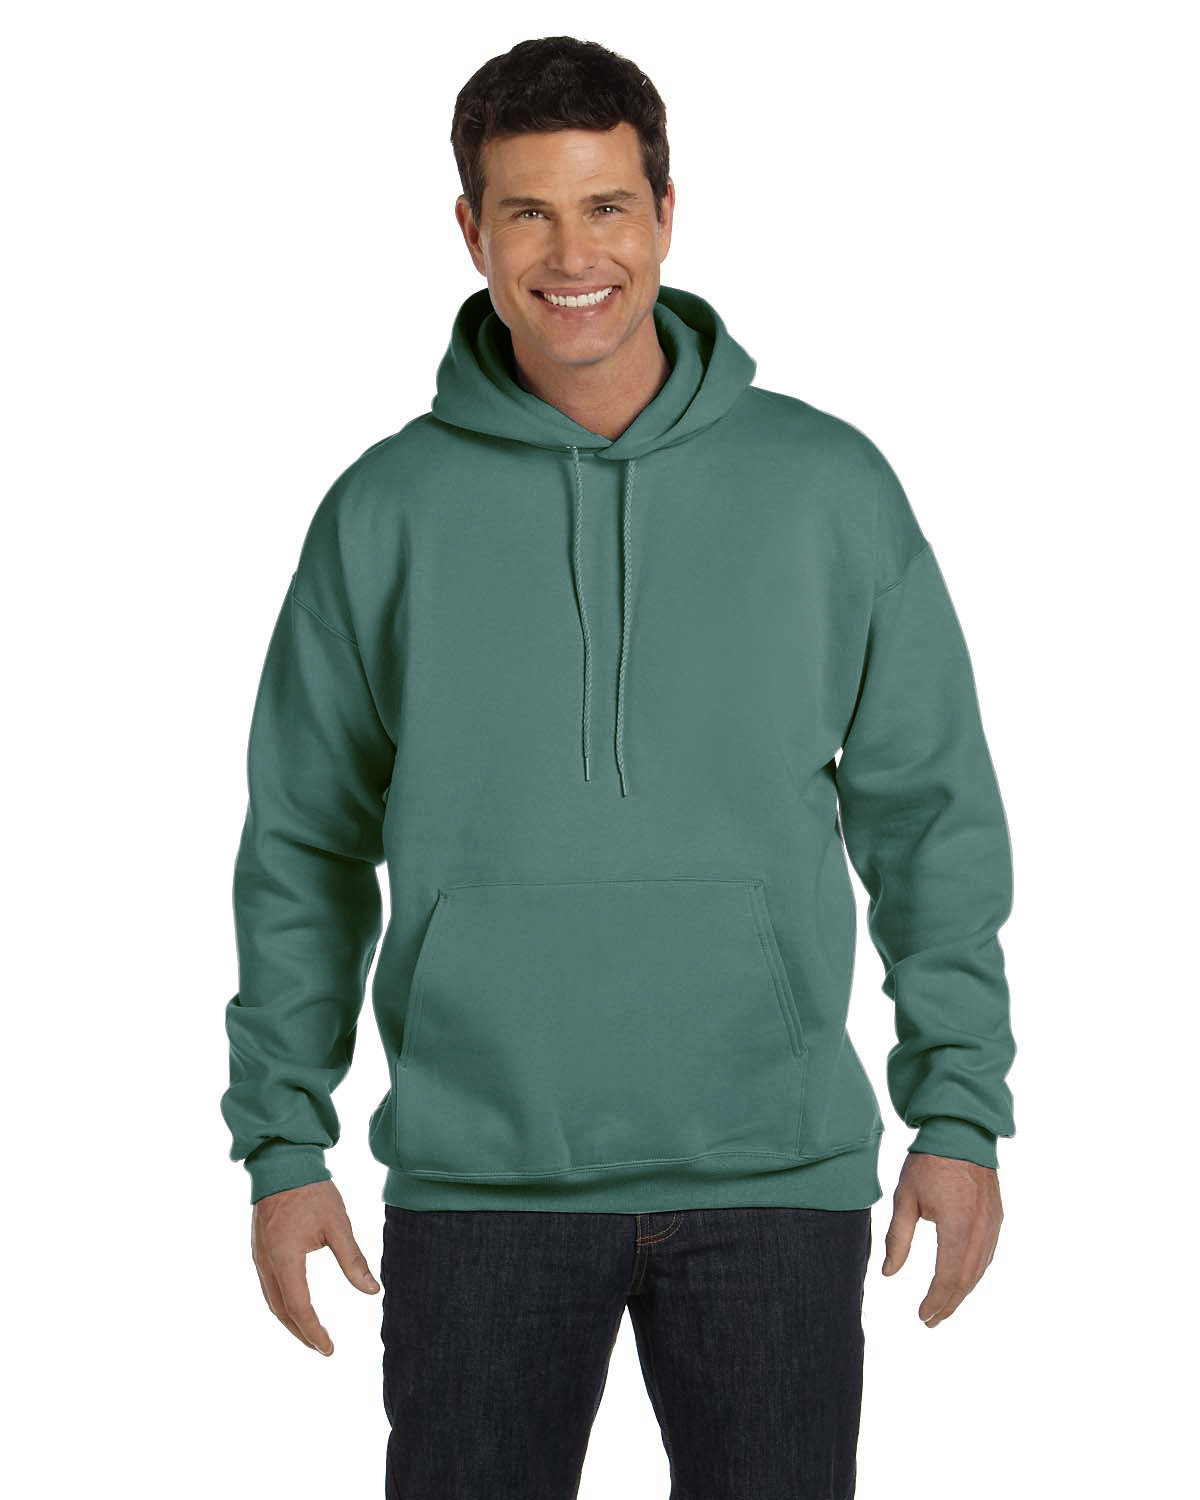 The USA Essential Sweatshirt - 100% Cotton Hoody - CottonMill